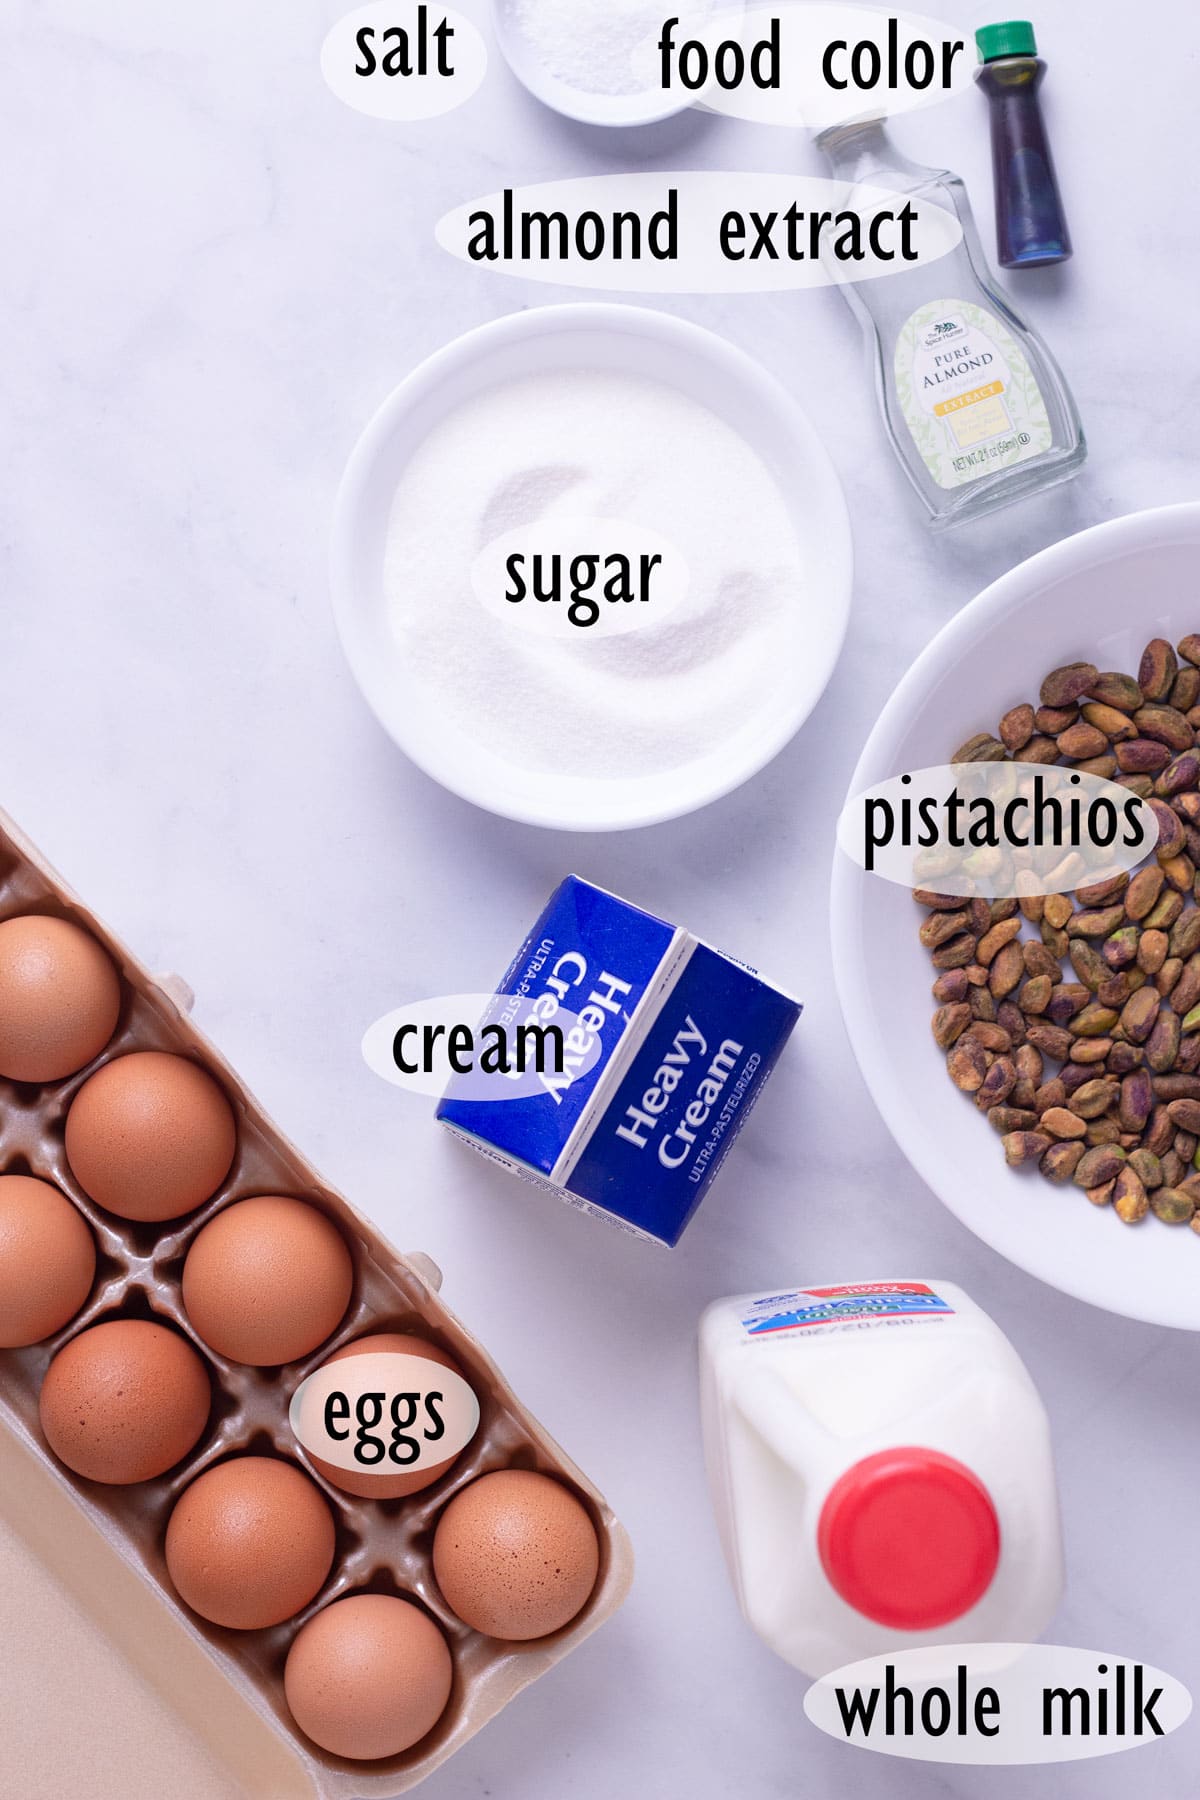 Individual ingredients needed for this recipe, including pistachios, eggs, cream, milk and sugar.